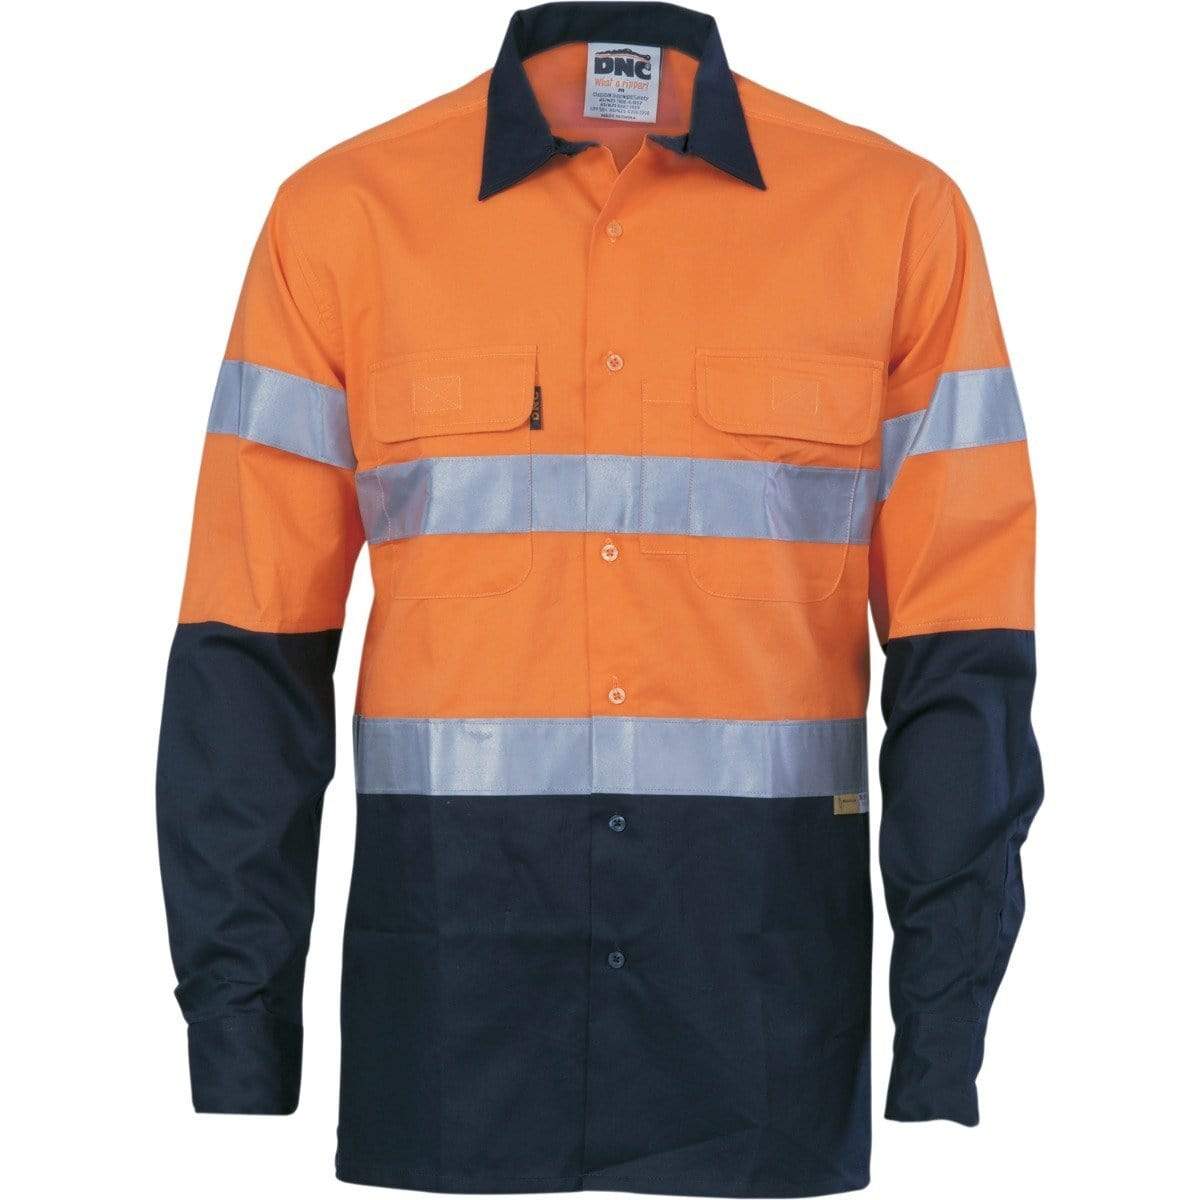 DNC Workwear Work Wear Orange/Navy / S DNC WORKWEAR Hi-Vis Cool-Breeze Cotton Long Sleeve Shirt with 3M 8906 Reflective Tape 3988